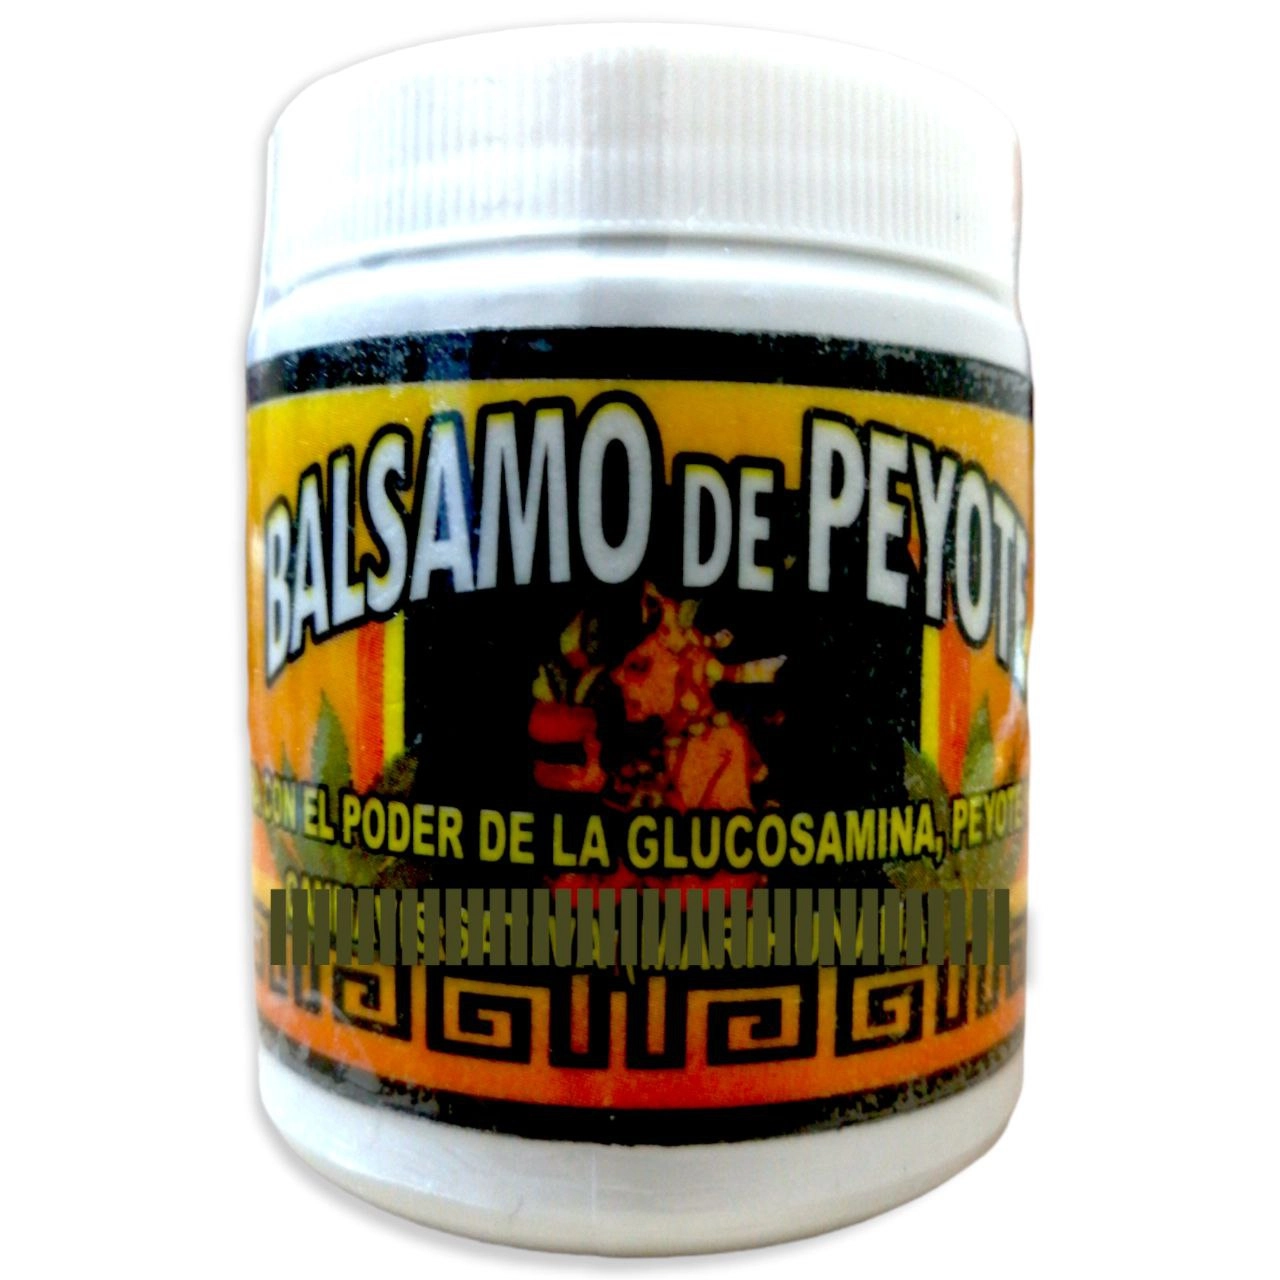 Balsamo de peyote 120grs - Natural cosmetics, Foto 4 Torokoto